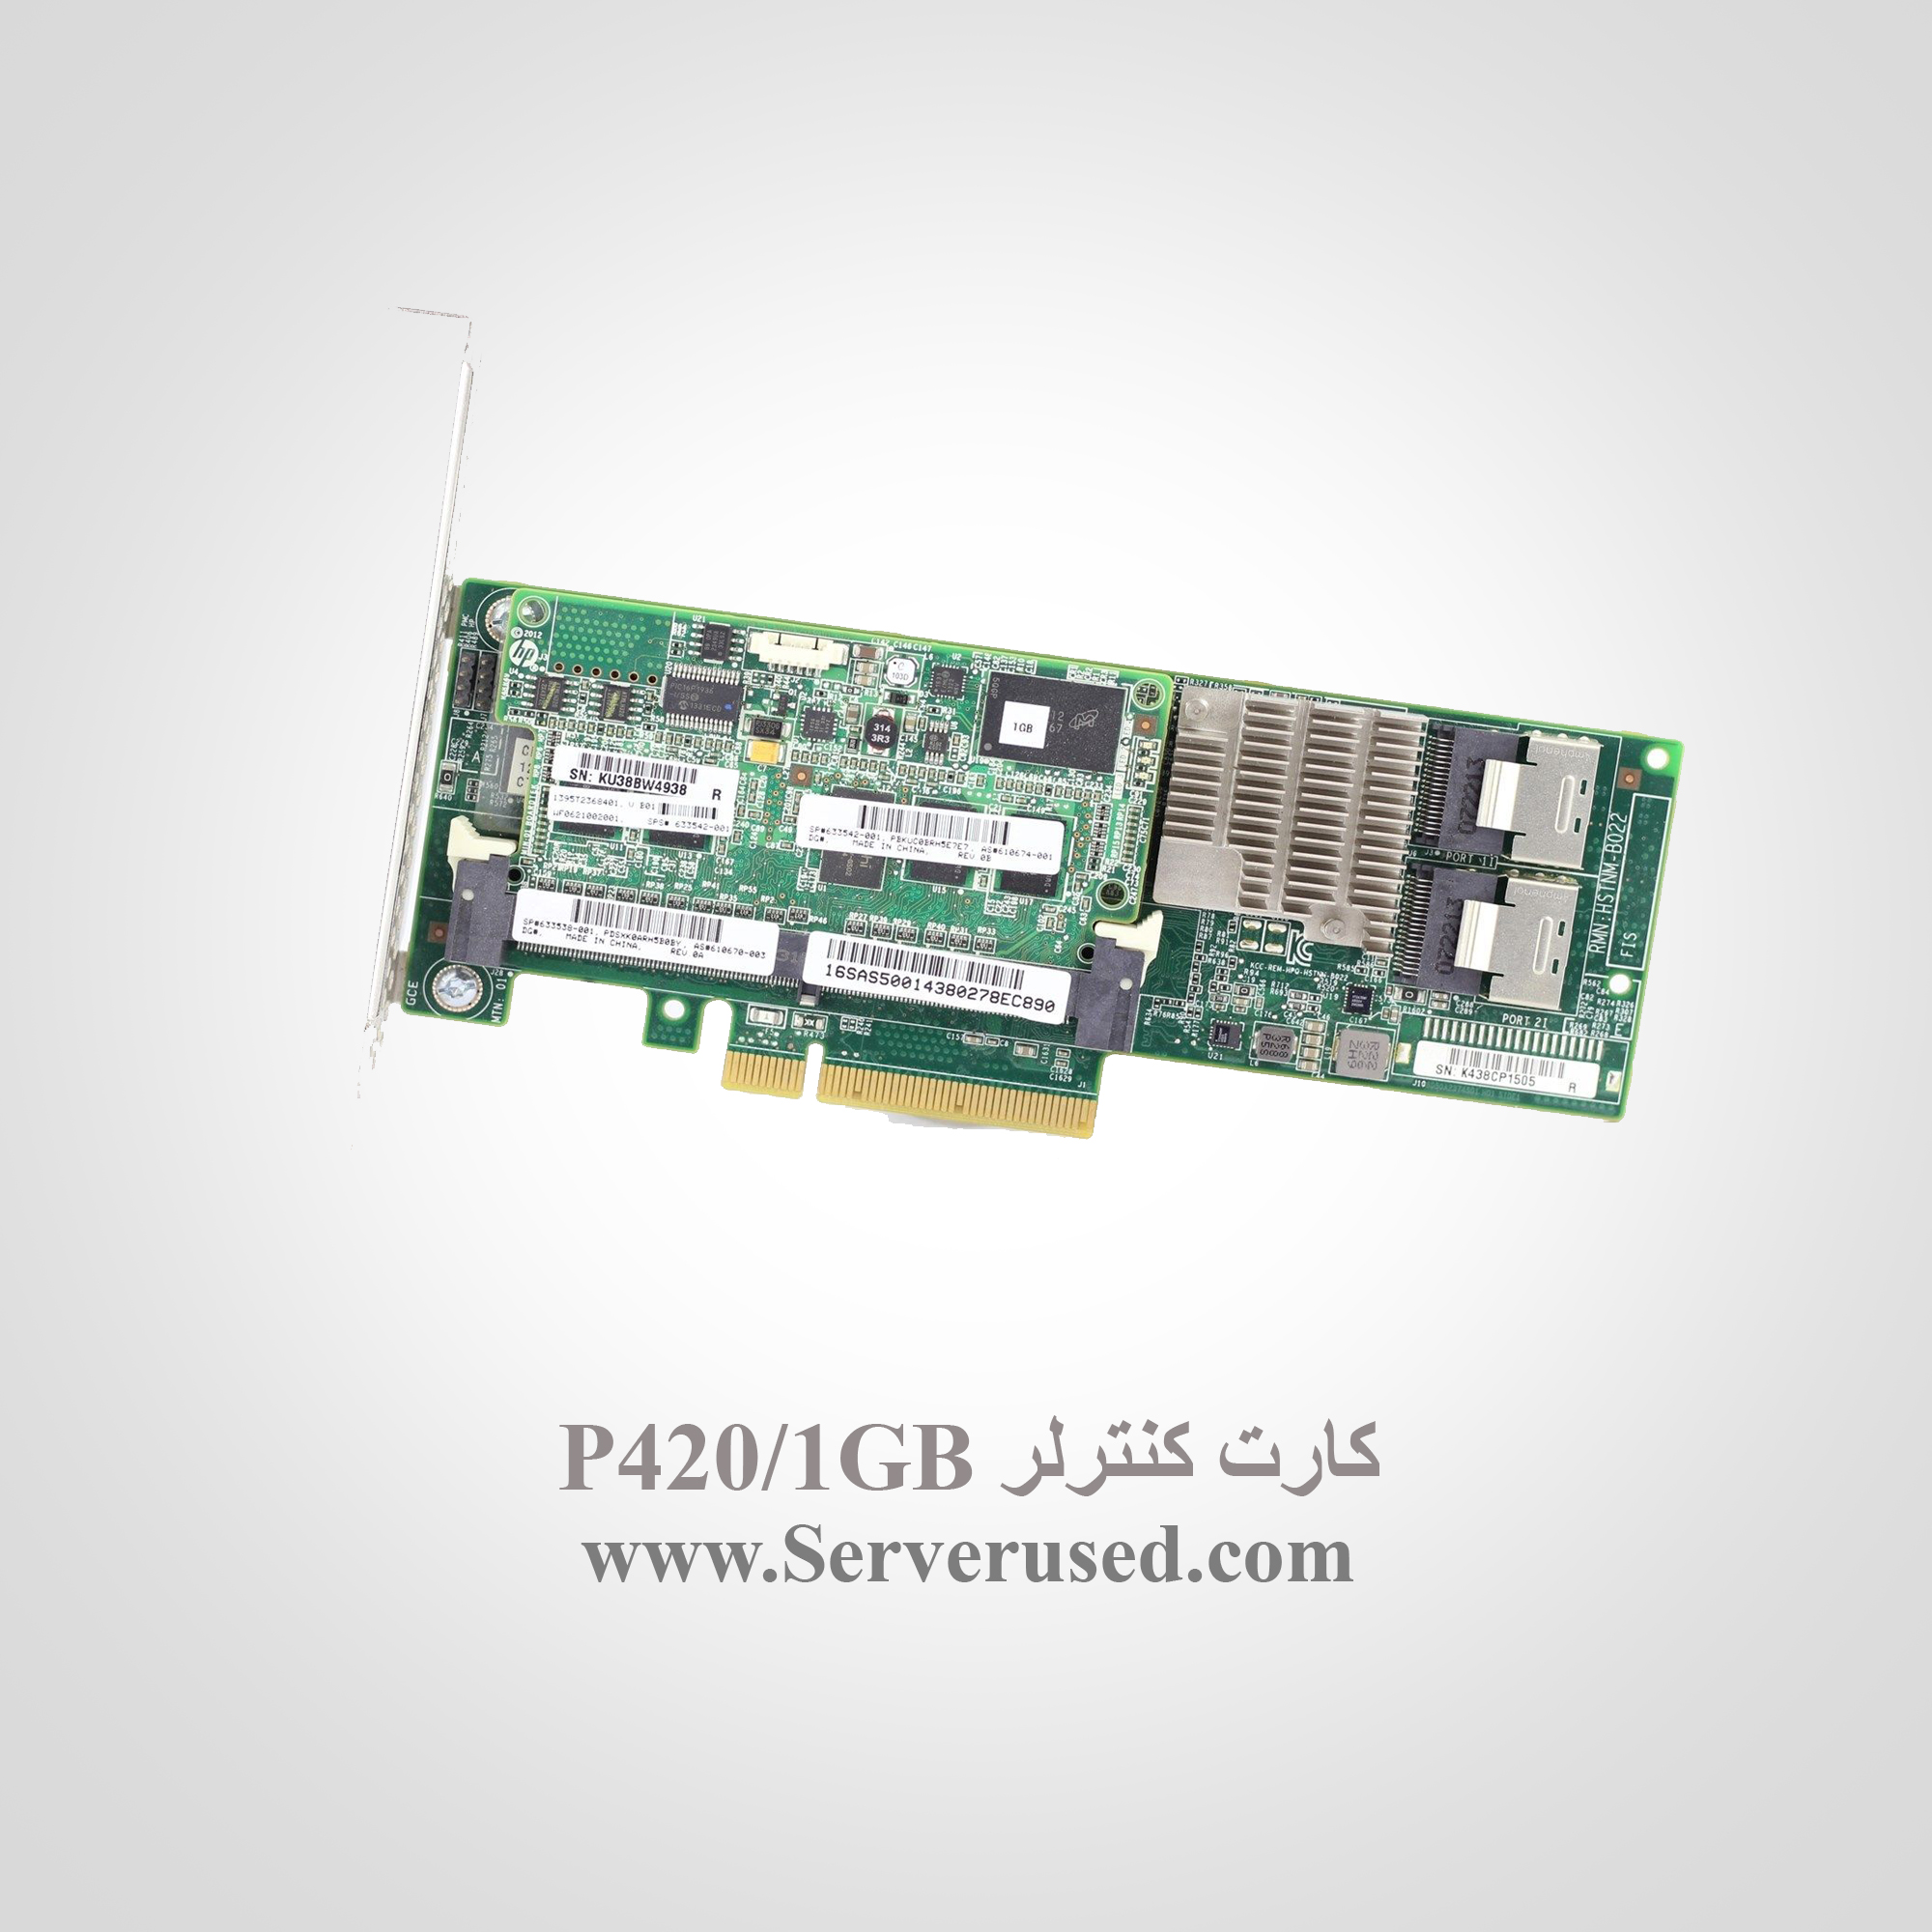 HP Smart Array P420/1GB FBWC 6Gb 2-Ports Internal SAS Controller 631670-B21